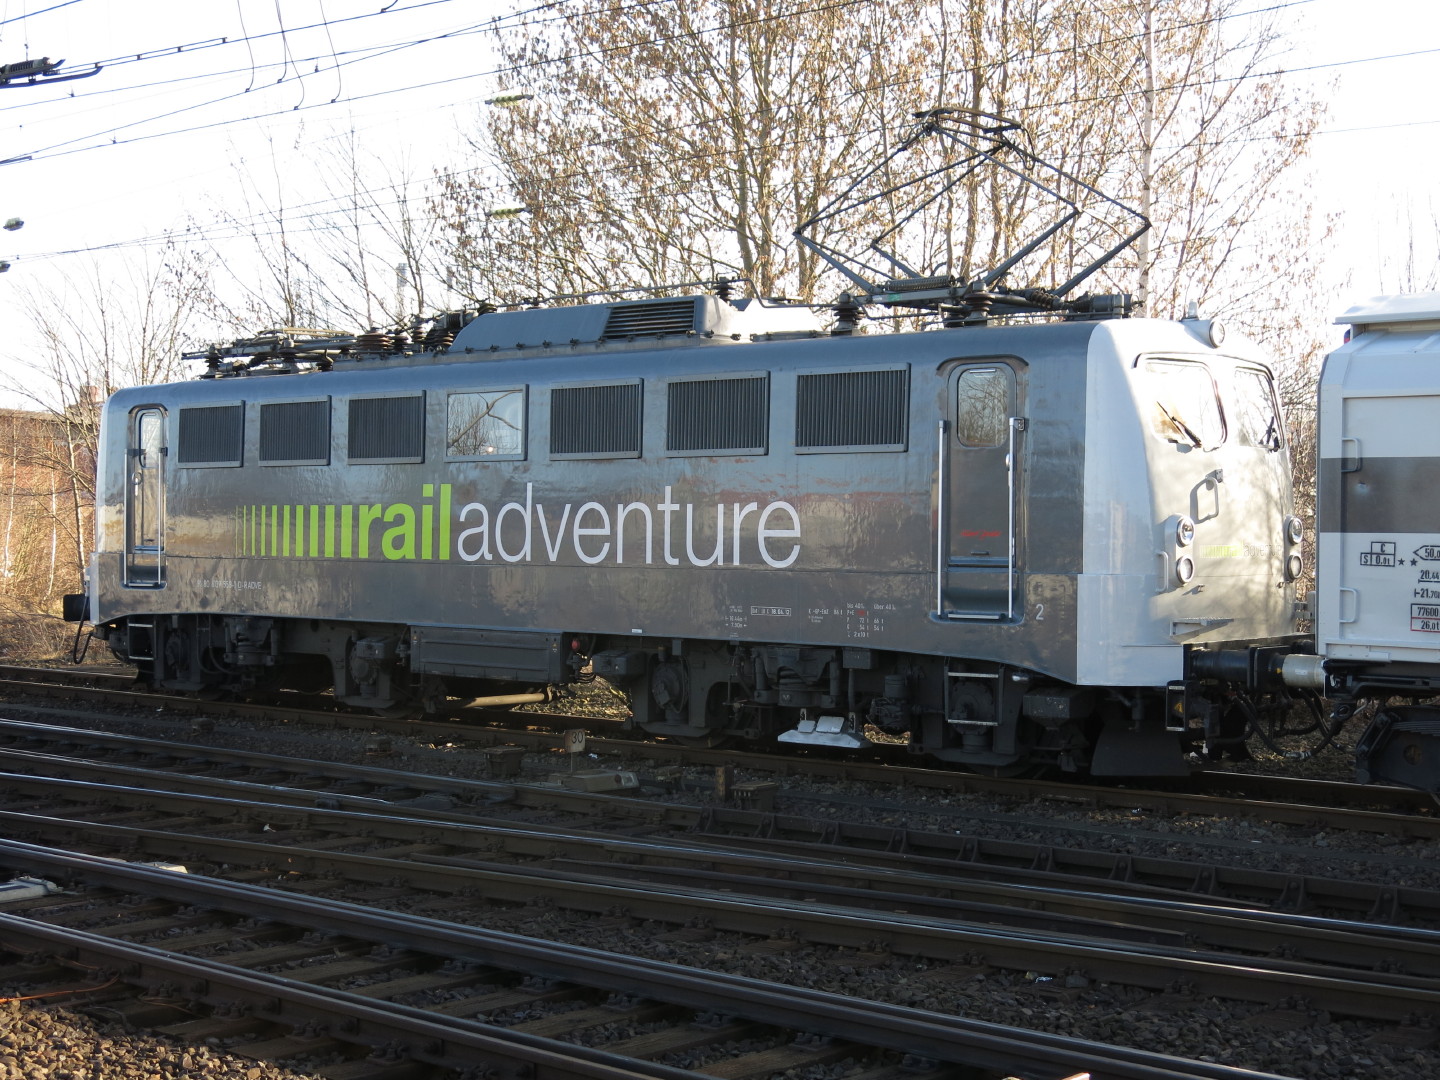 Lok Nr. 139 558 steht als rail adventure